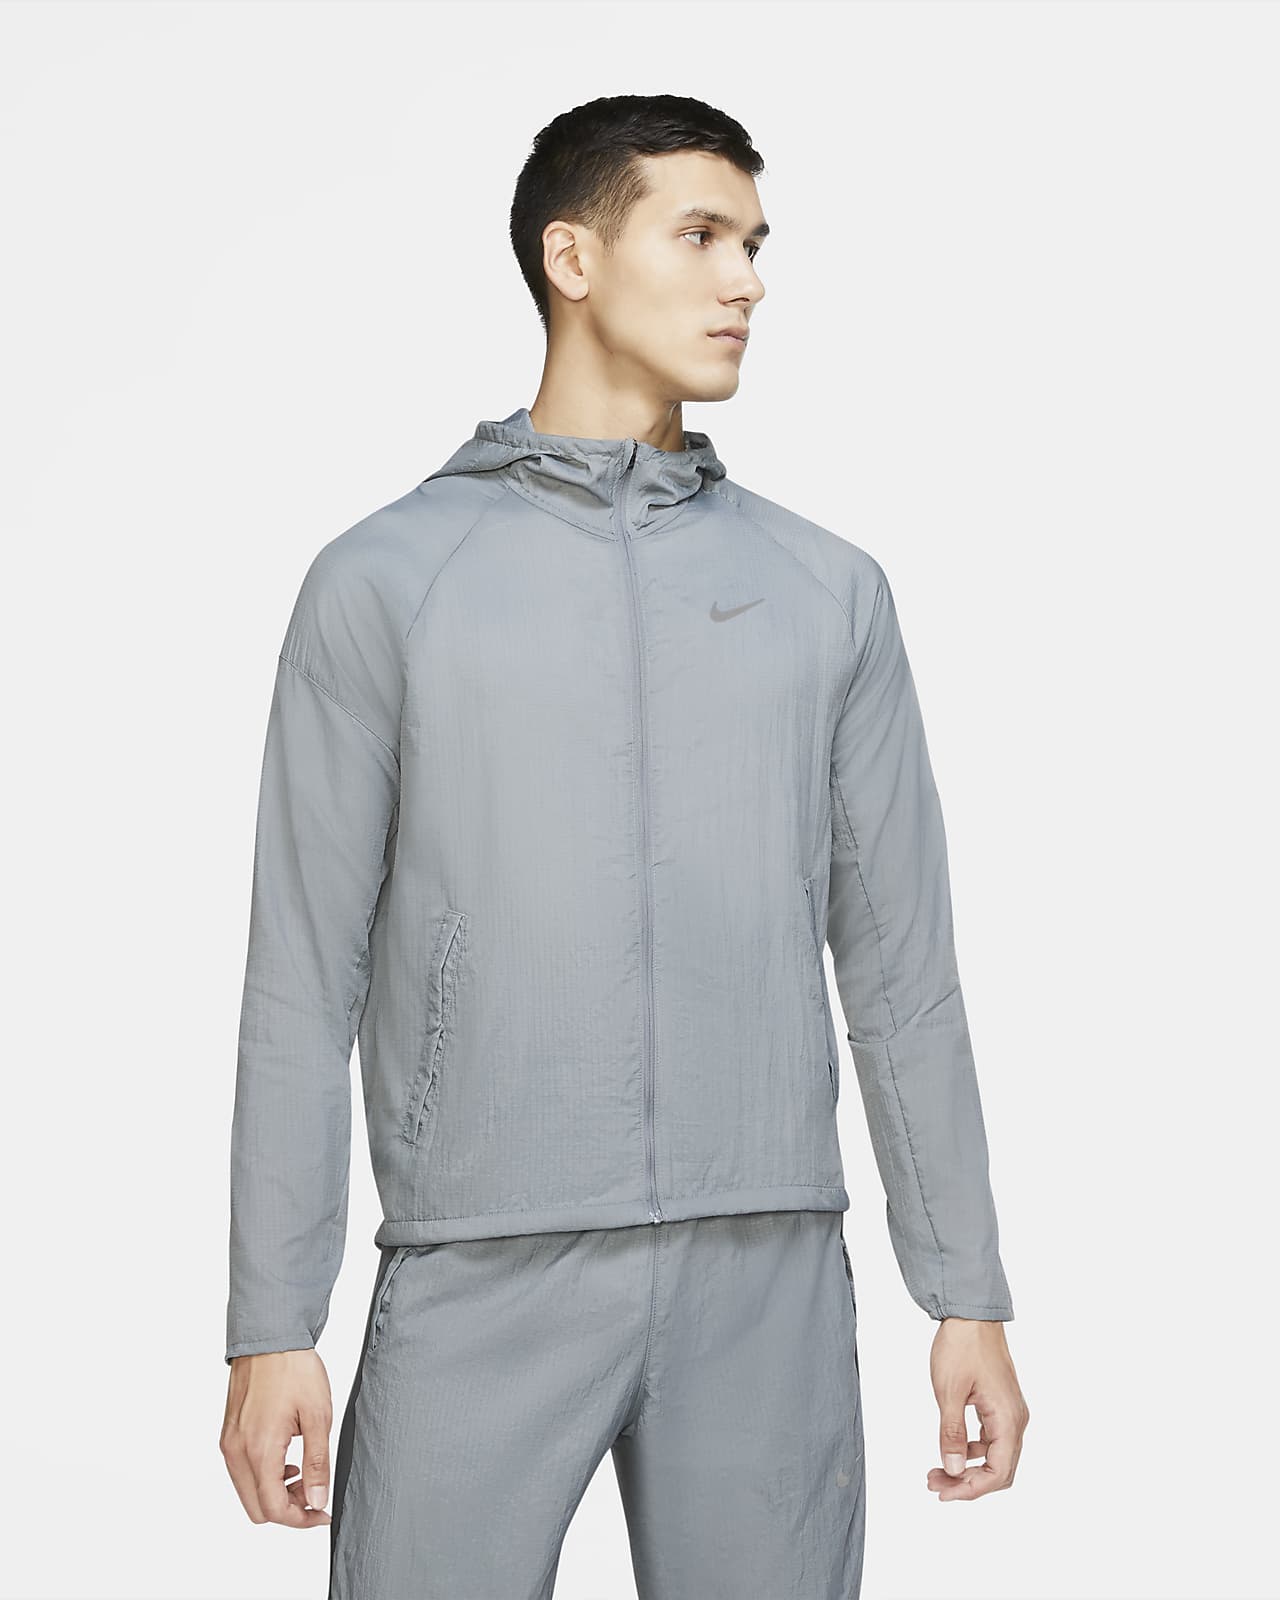 Nike Mens Essential Running Jacket Choose Sz/Color: XL/Royal 